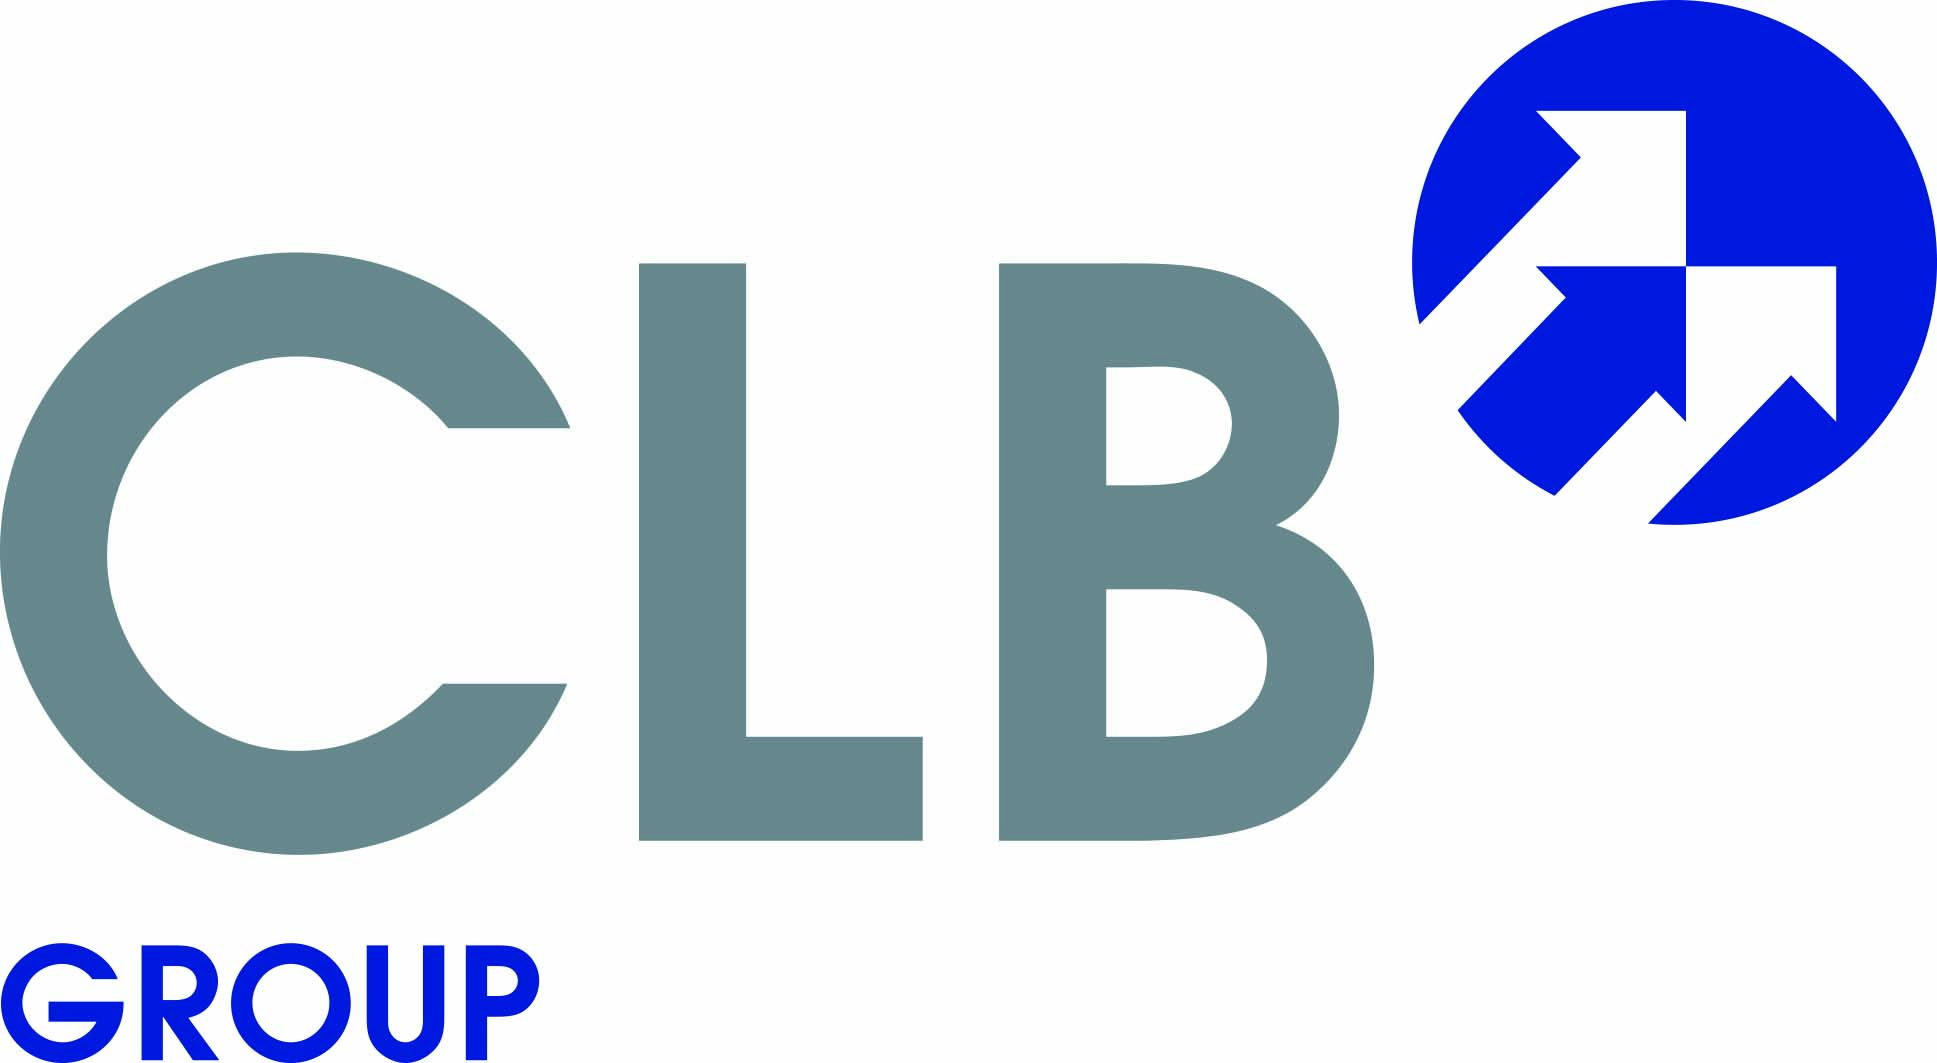 CLB Group logo